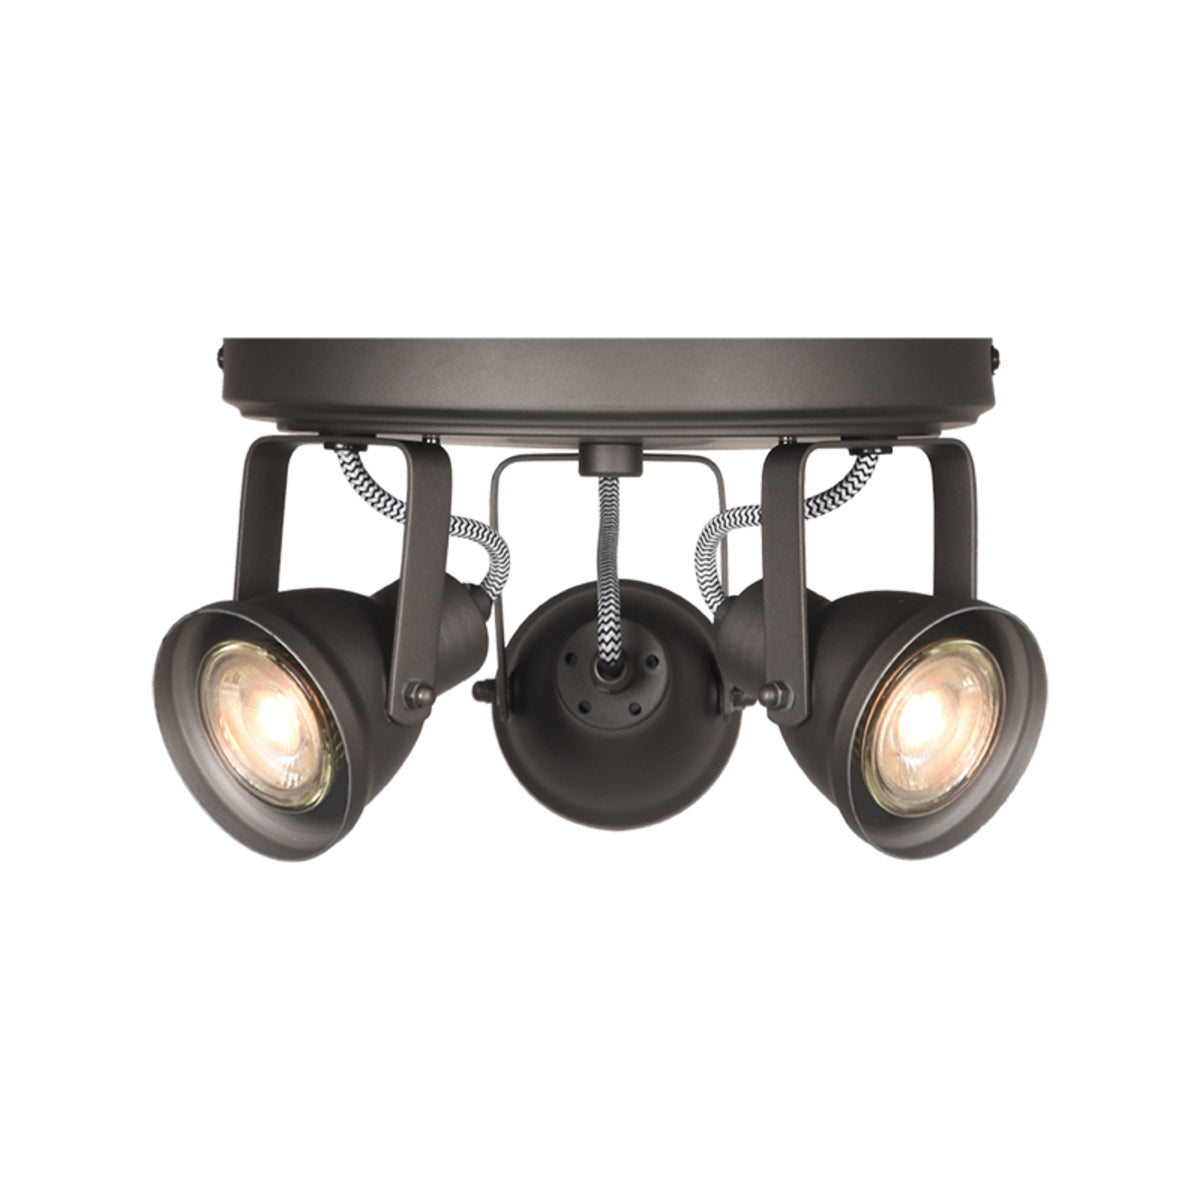 LABEL51 Spot Max LED - Gray - Metal - 3 Lights